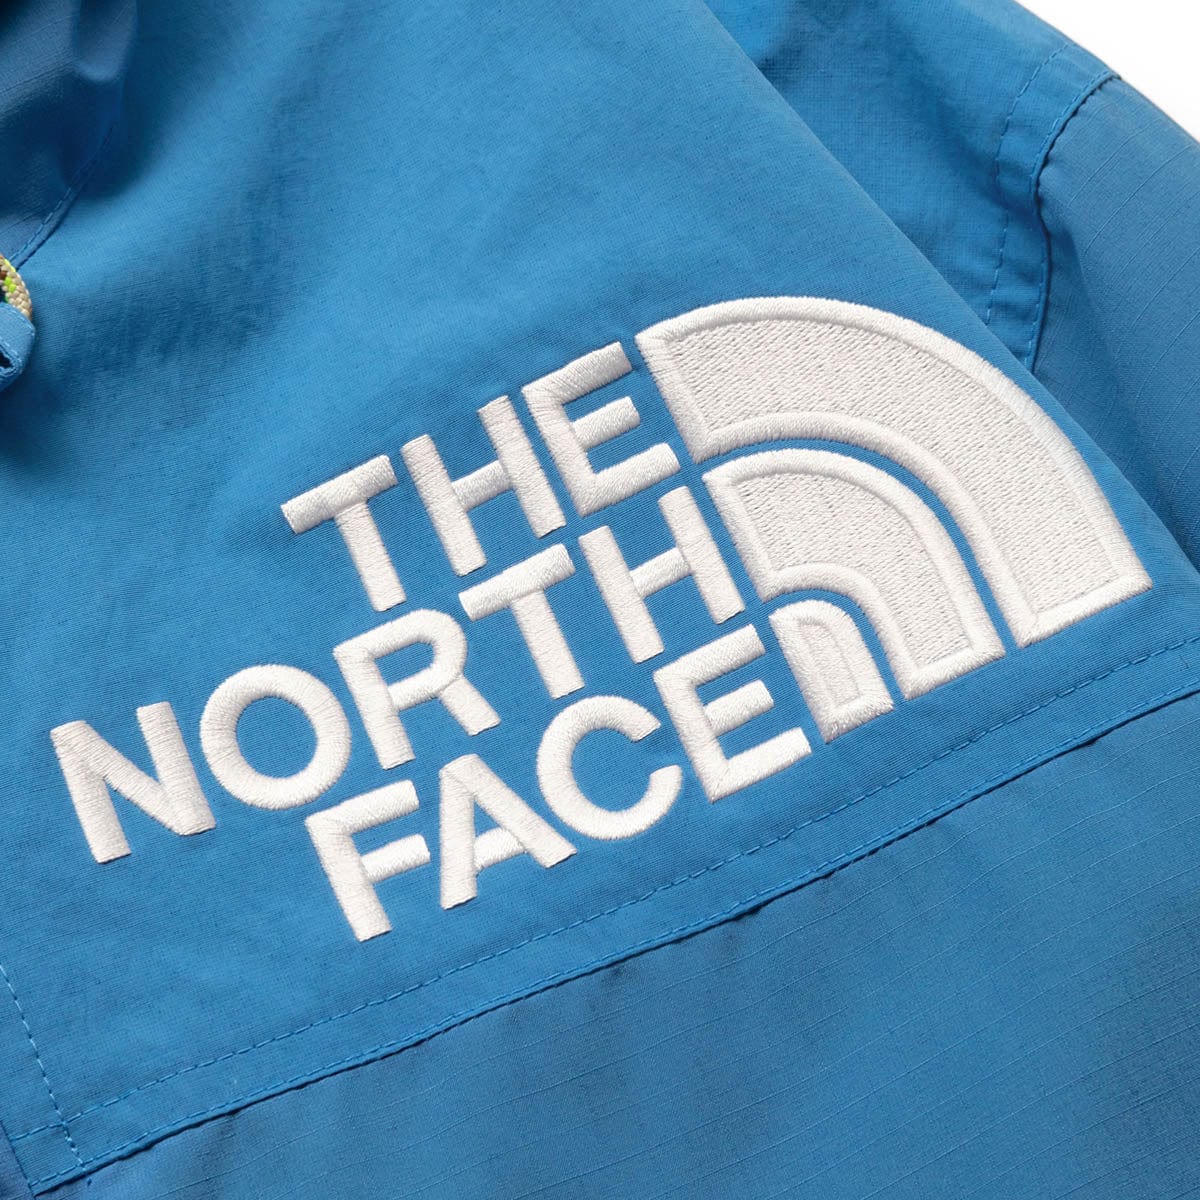 The North Face Outerwear 86 LOW-FI HI-TEK MOUNTAIN JACKET